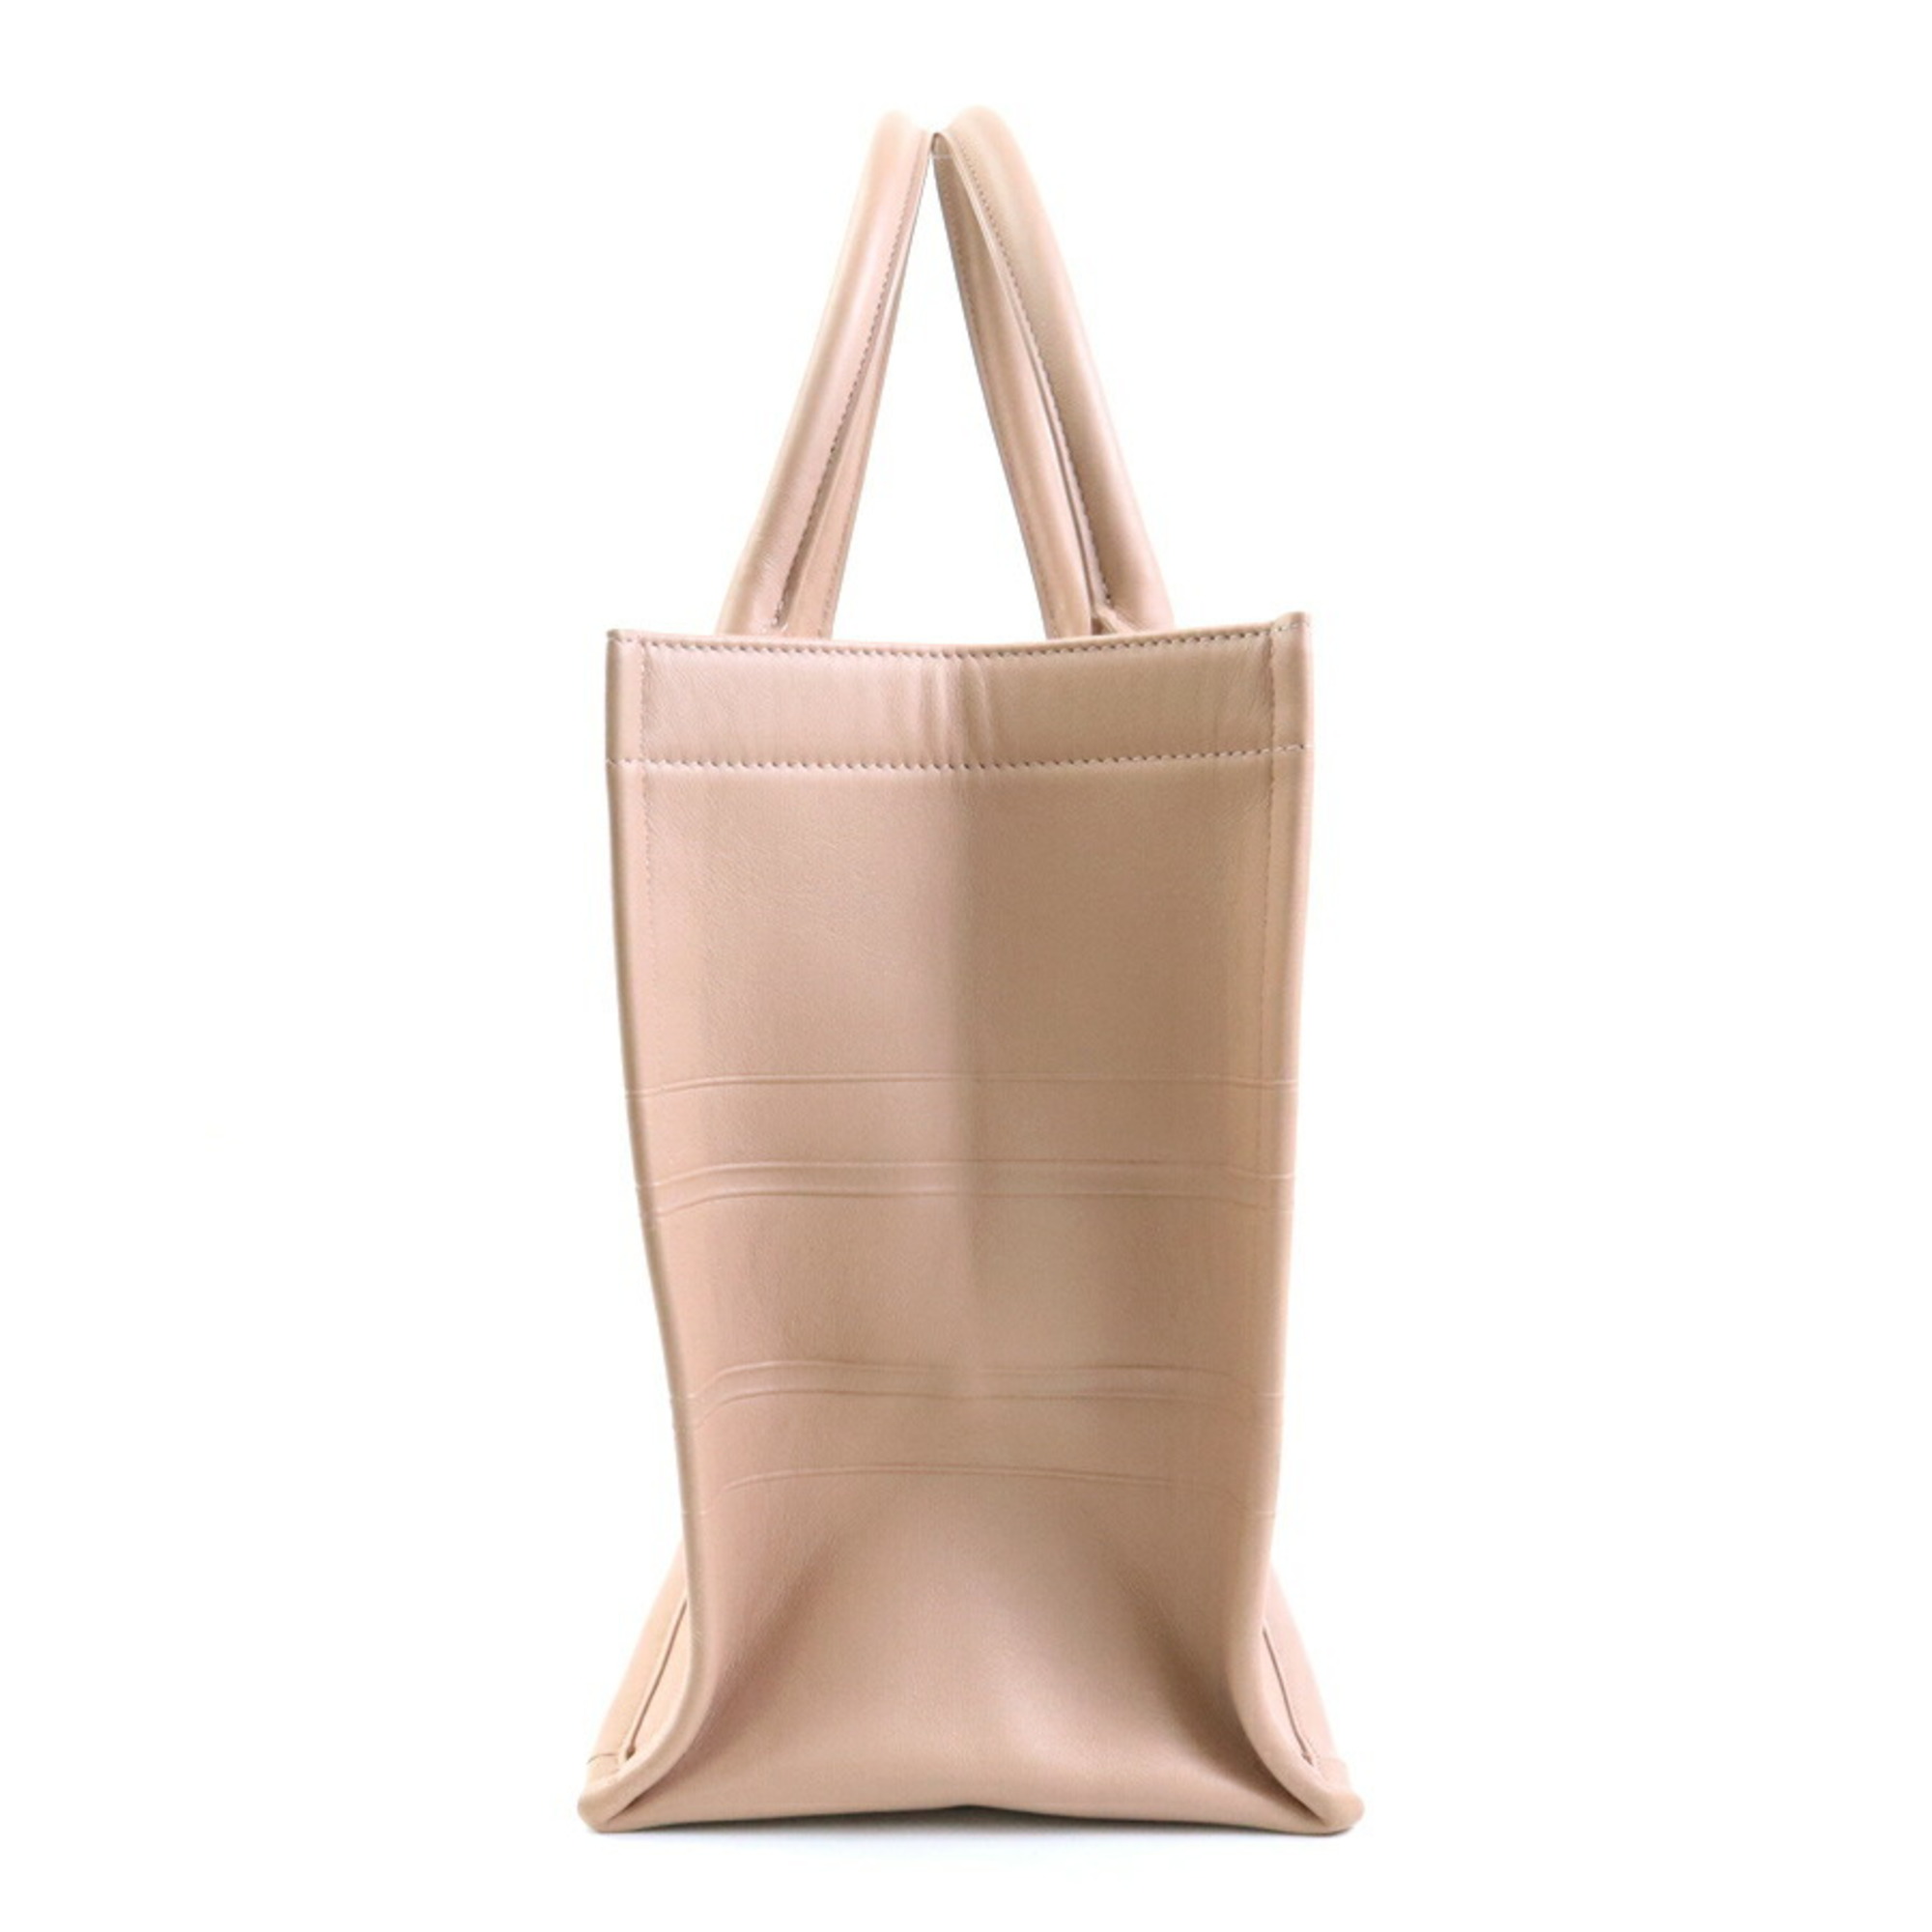 Christian Dior Handbag Tote Bag Book Leather Pink Beige - Women's e58507a